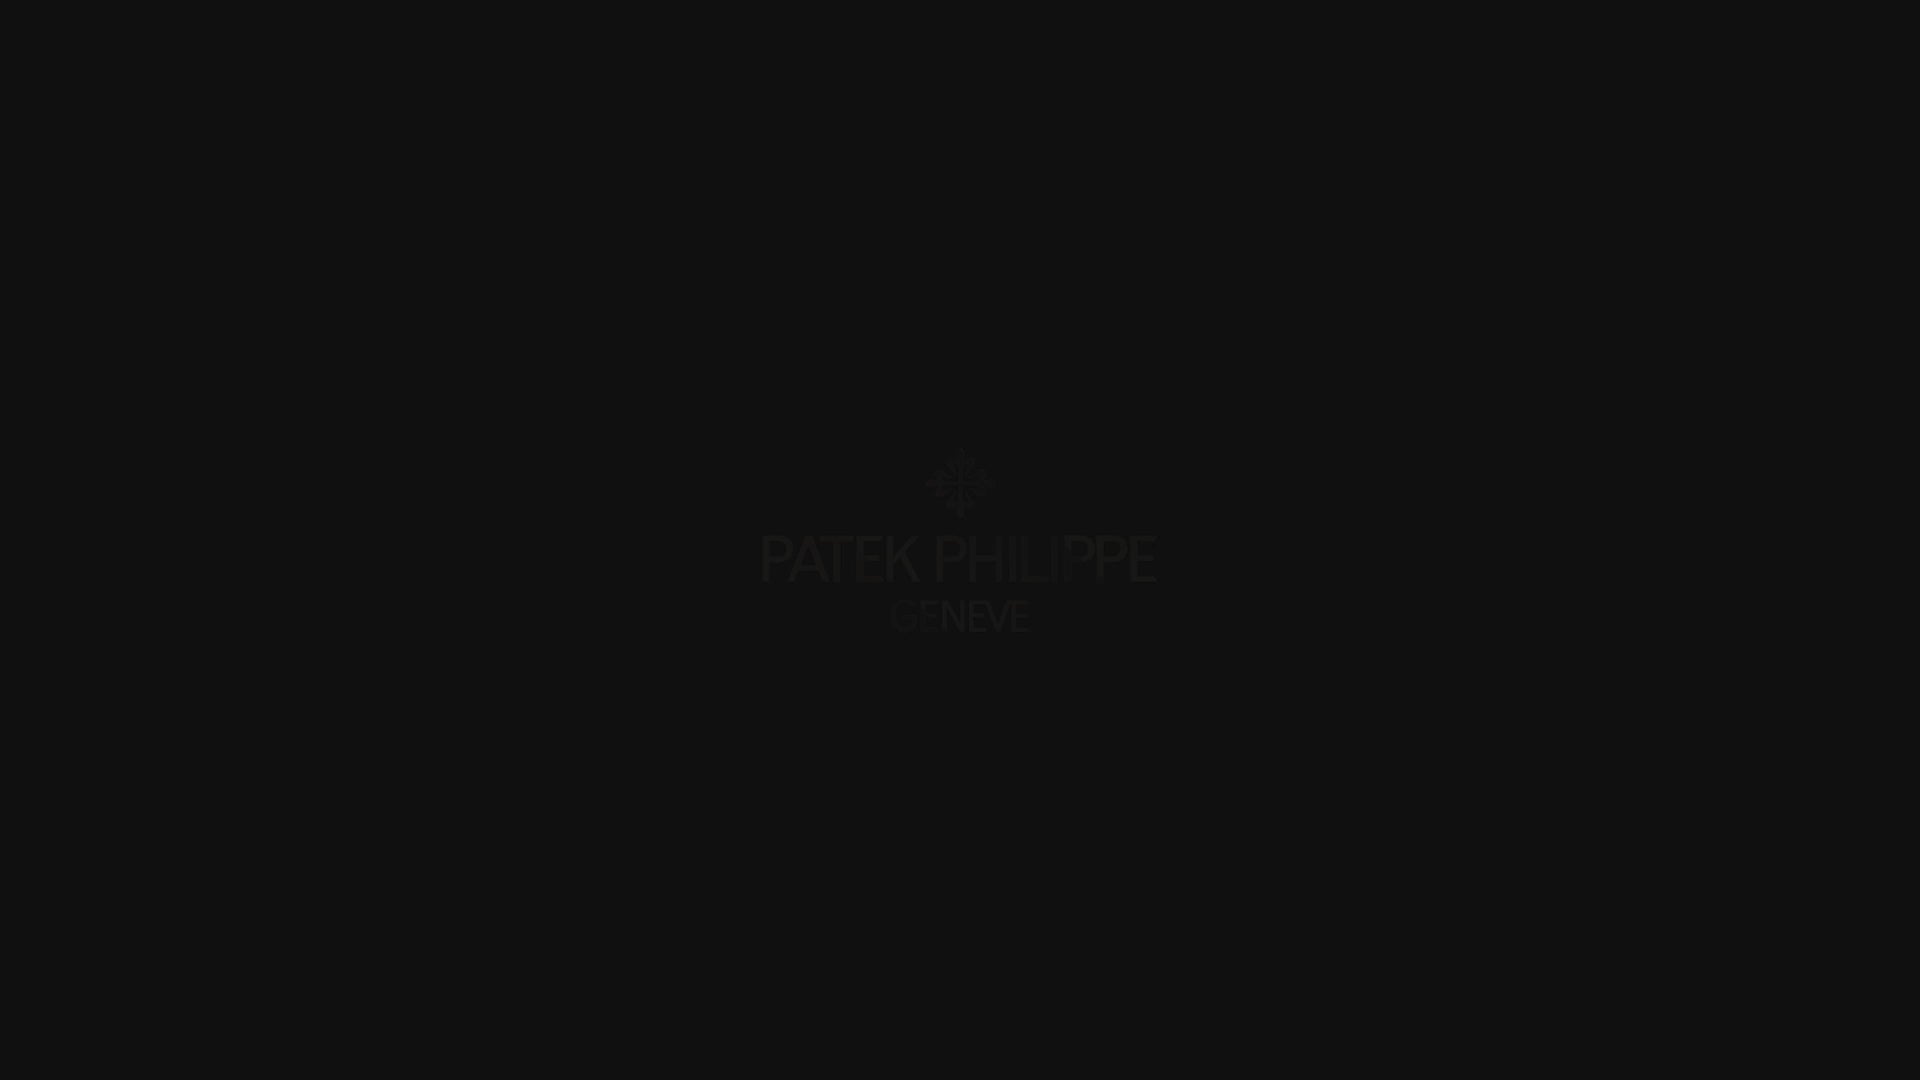 Patek Philippe Complications 5205R-011